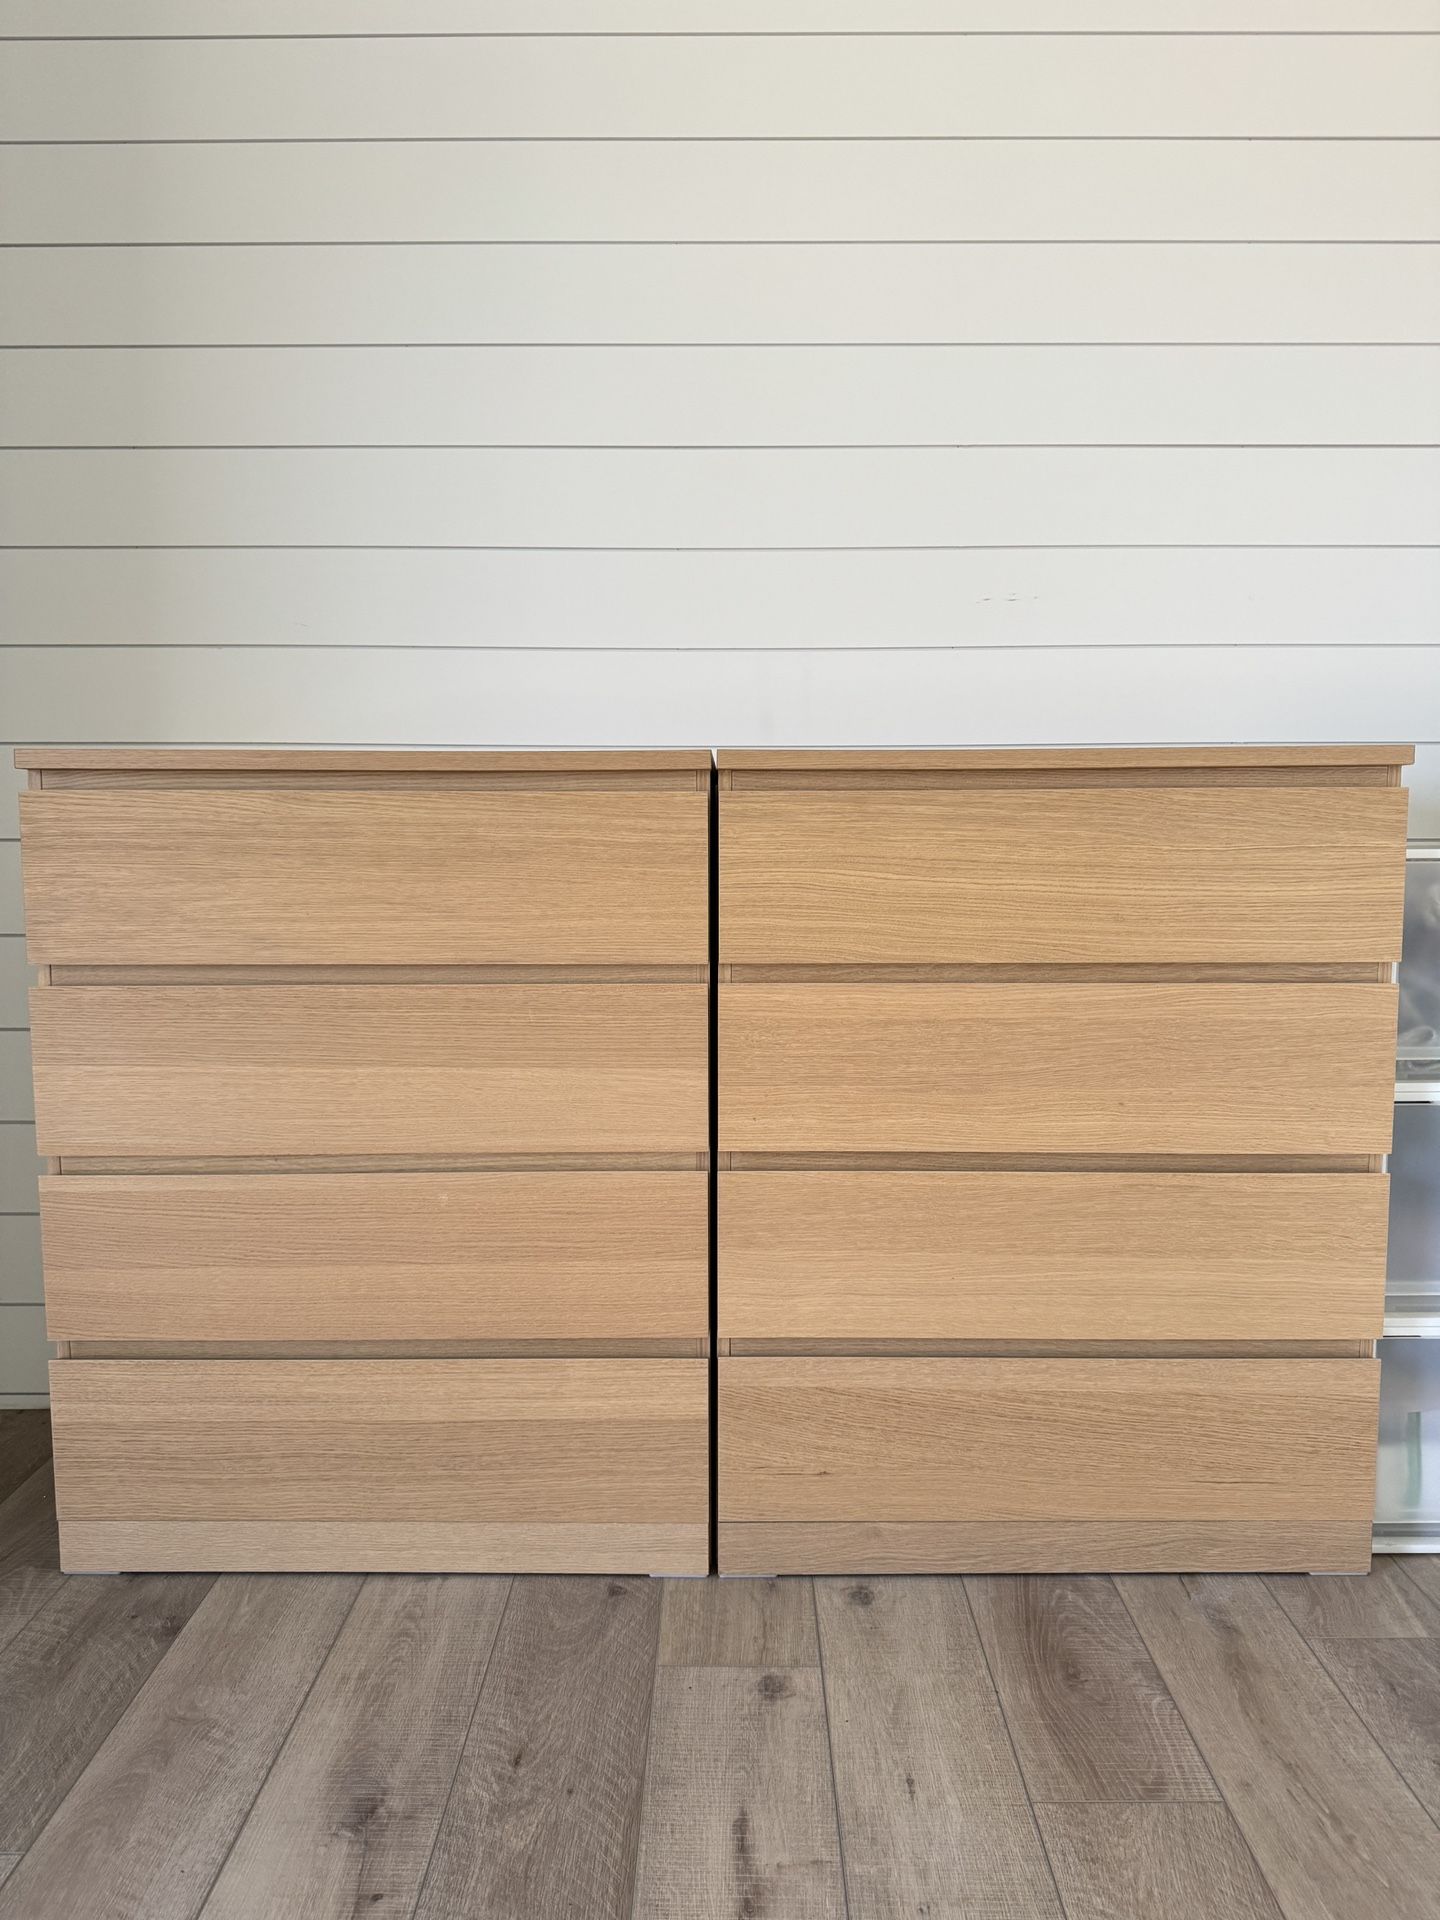 $125 - IKEA 4 Drawers Dresser 